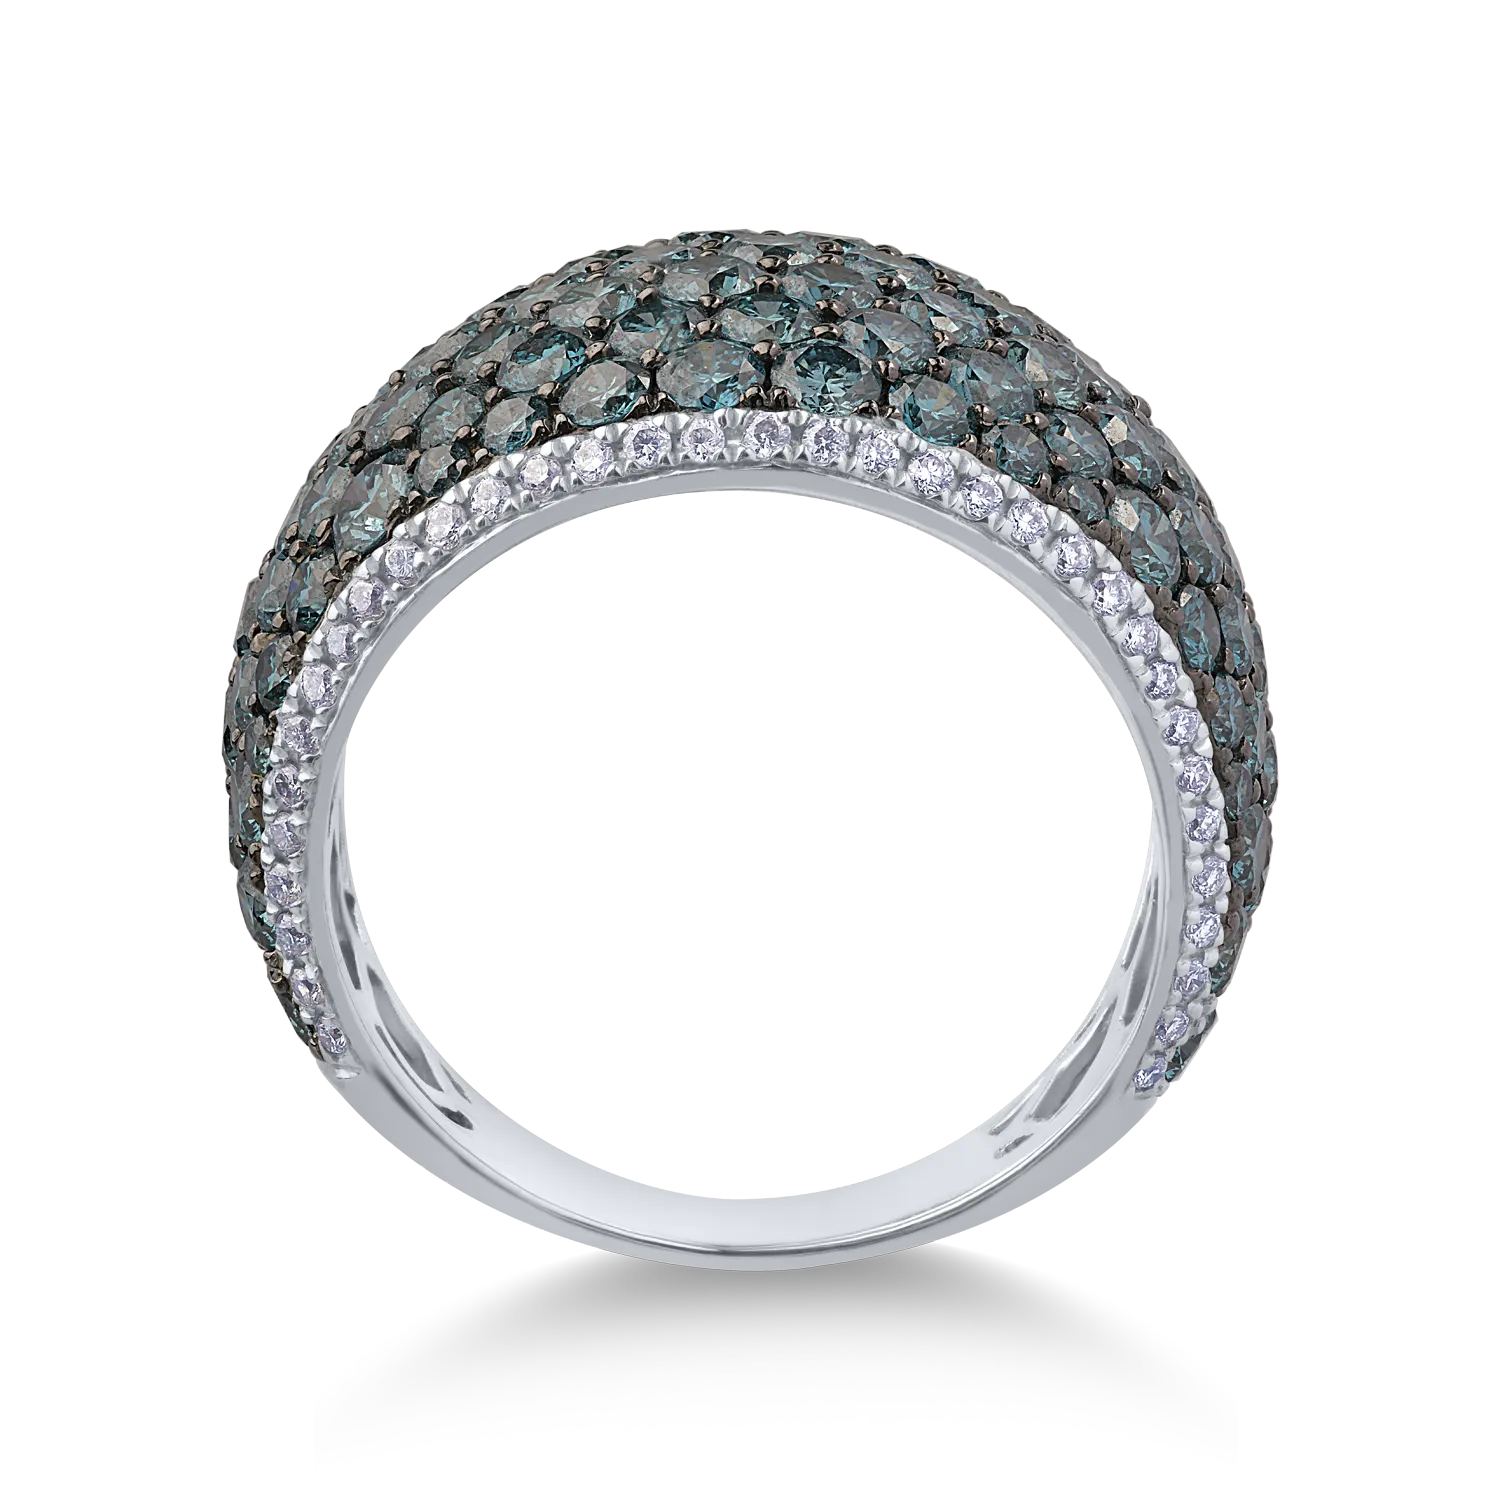 Inel din aur alb de 18K cu diamante albastre de 4.05ct si diamante transparente de 0.26ct